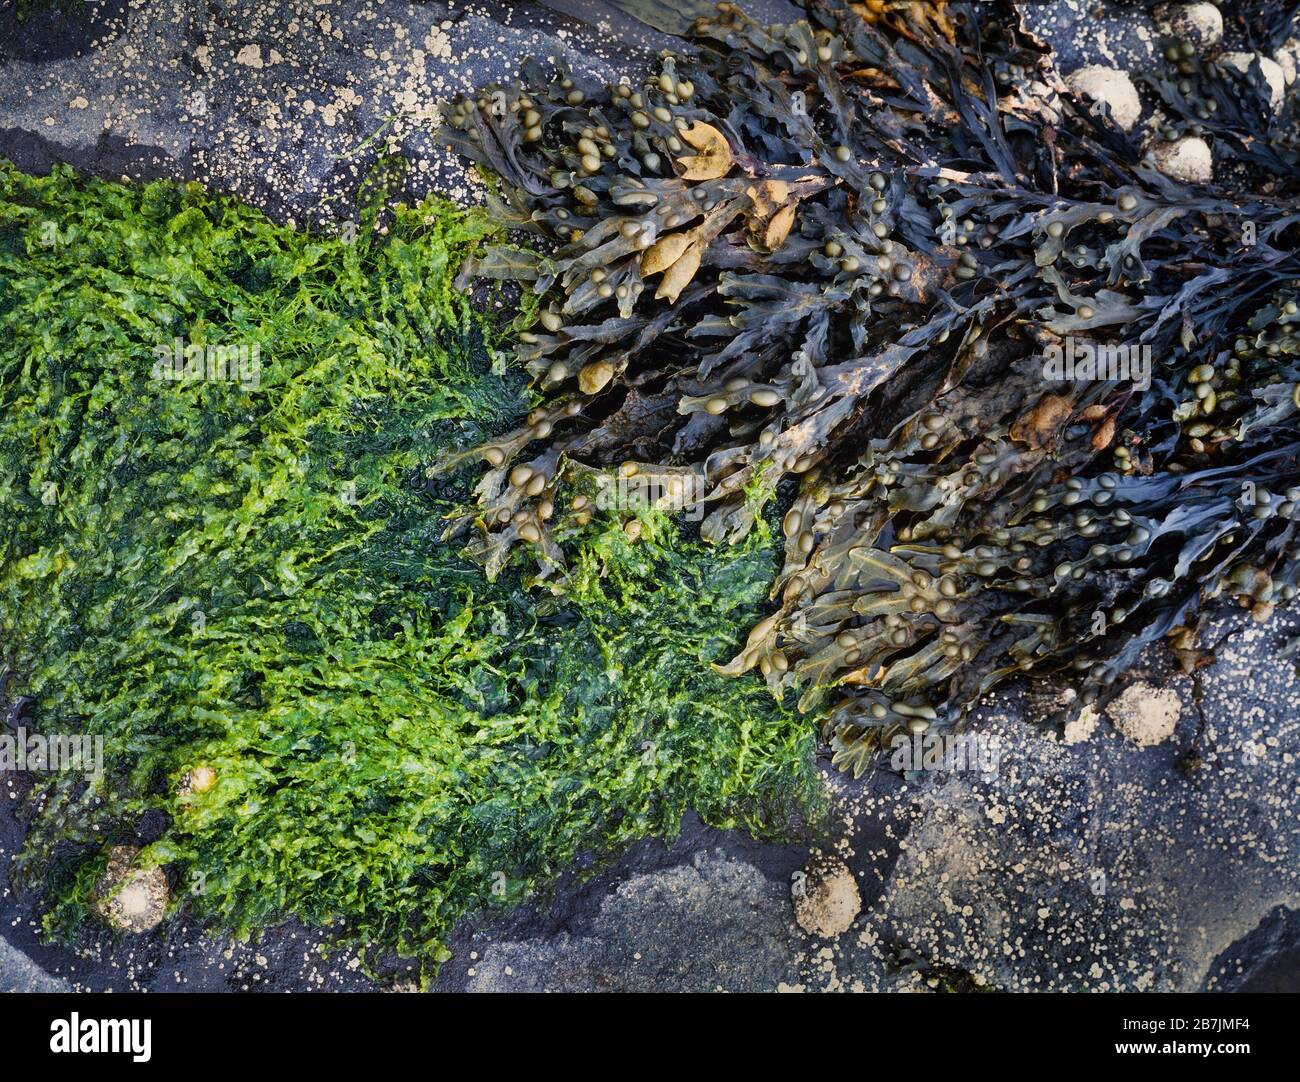 Marine beach life, seaweeds, Bladderwrack (Popweed) Fucus vesiculosus, green algae Stock Photo